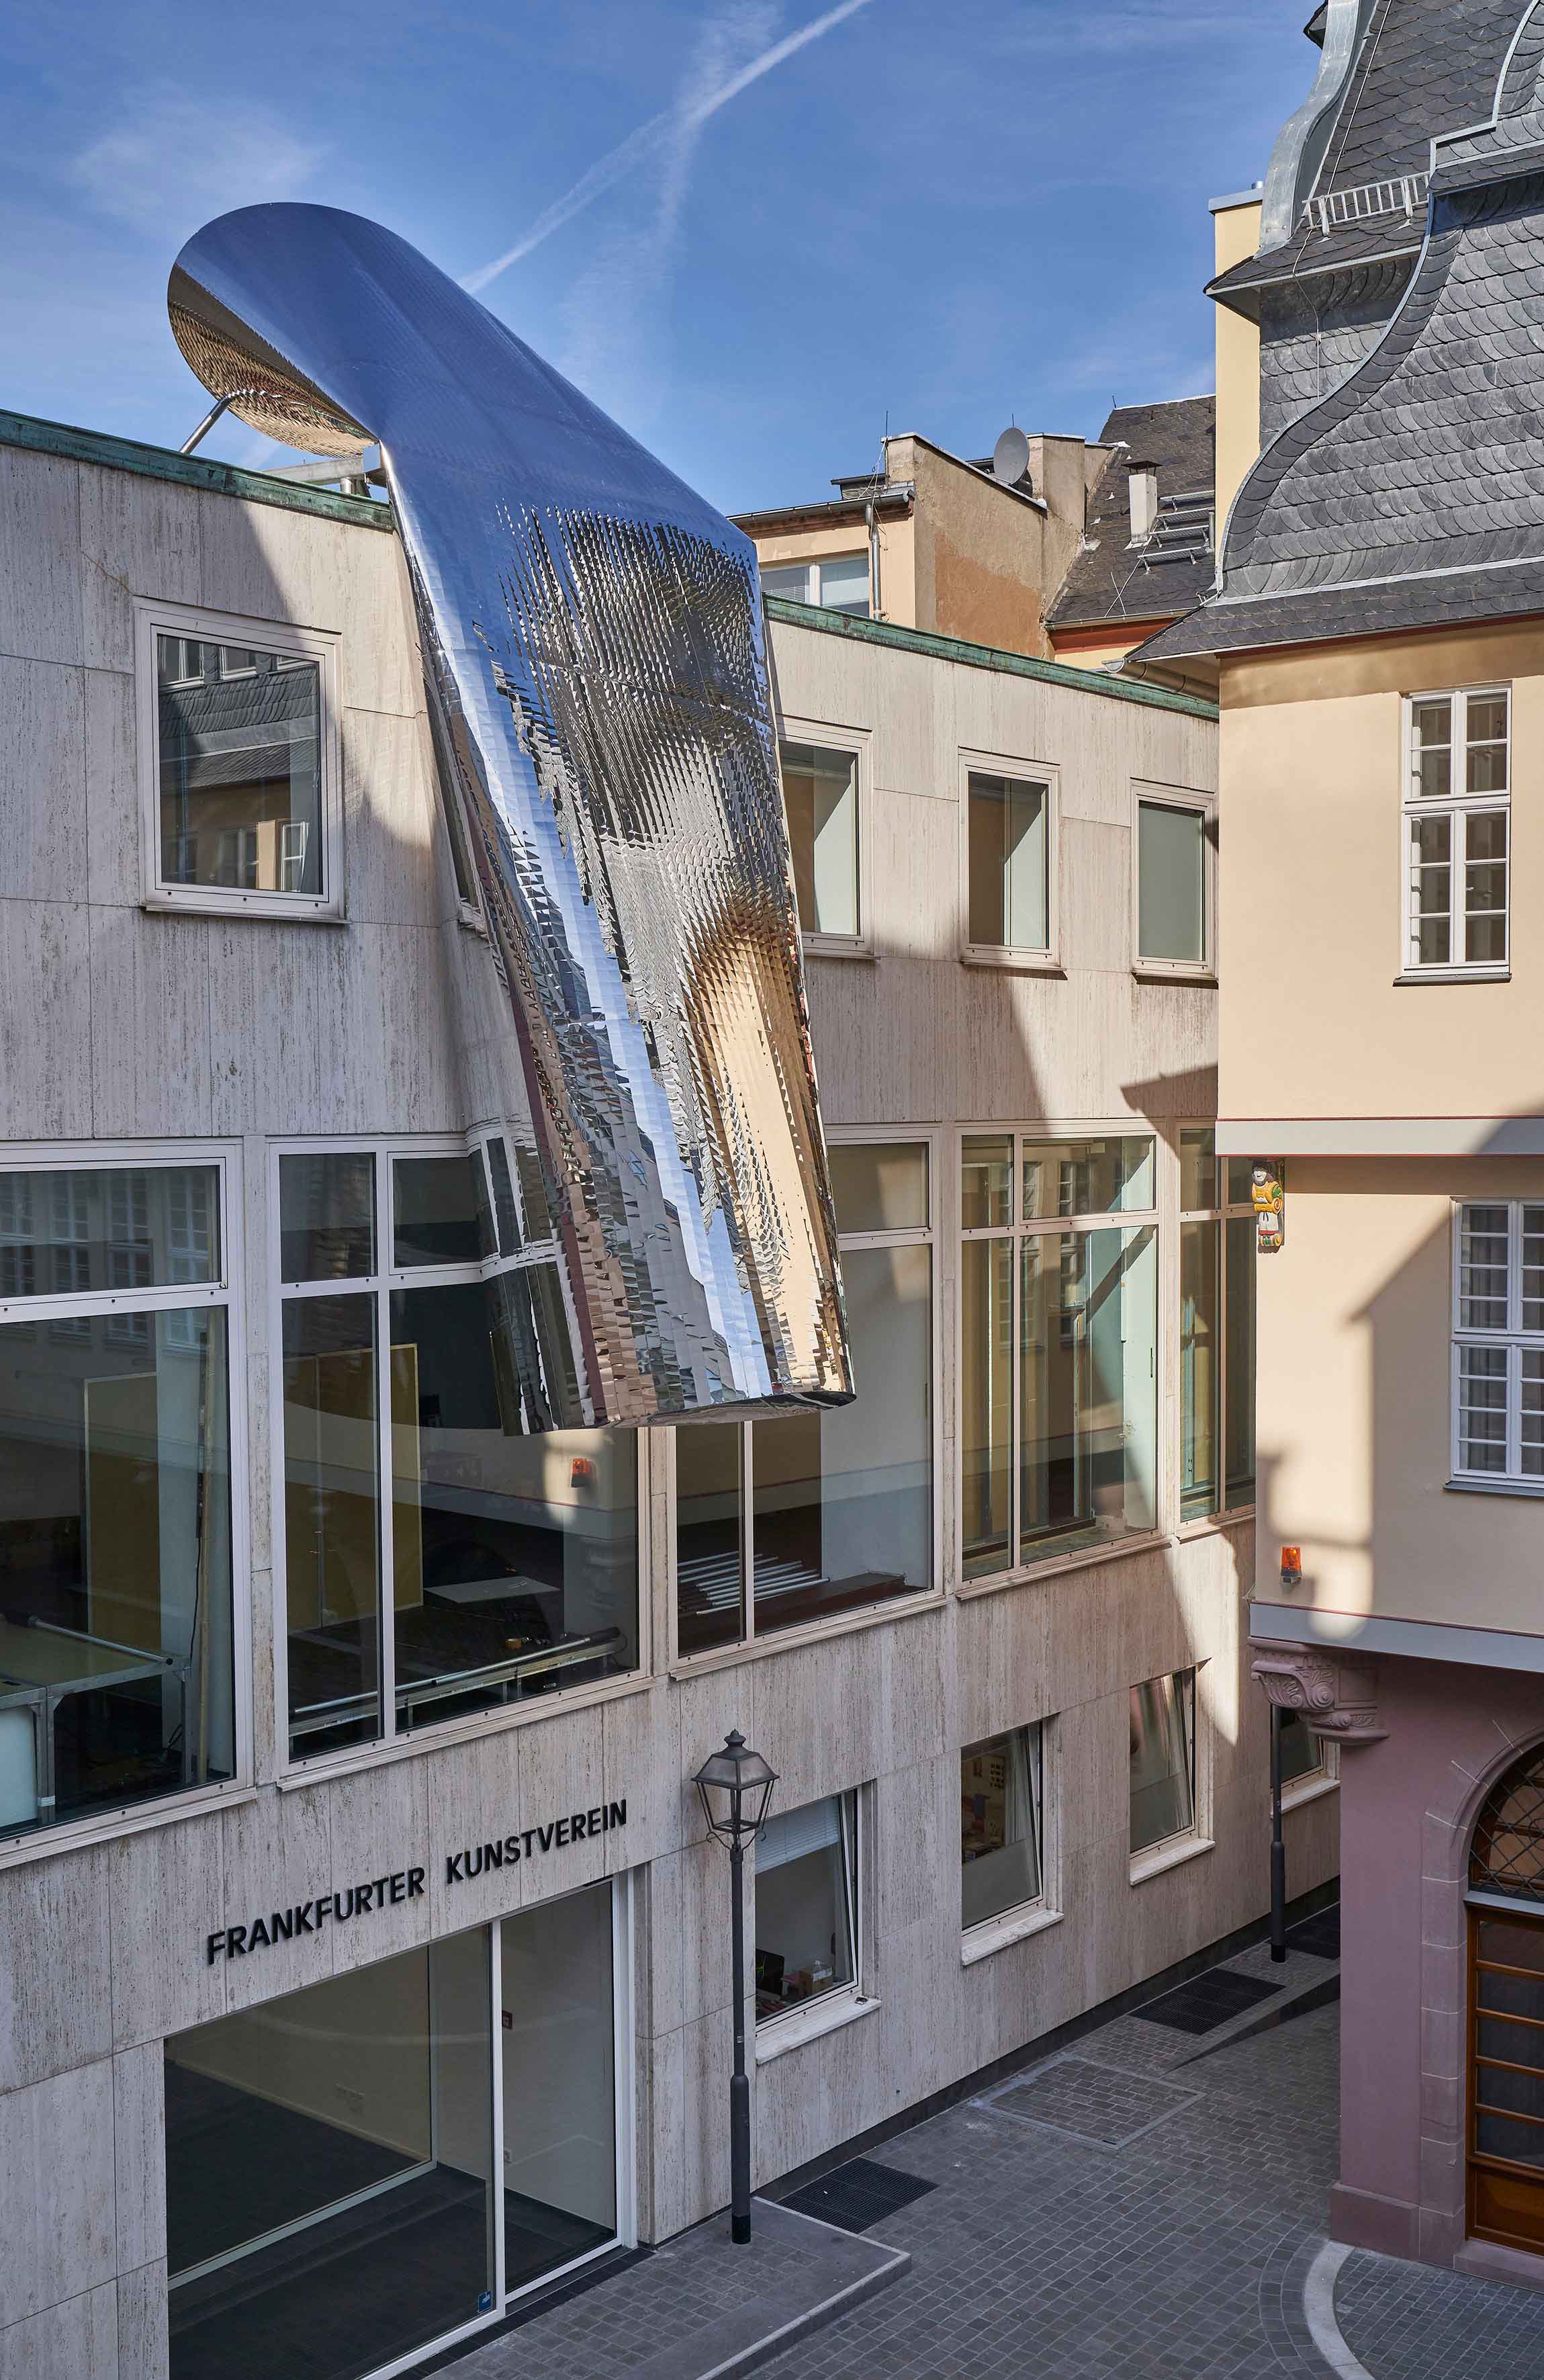 FKV_WinterHoerbelt_Die Grosse Illusion_2018_photo:Norbert Miguletz@Frankfurter Kunstverein